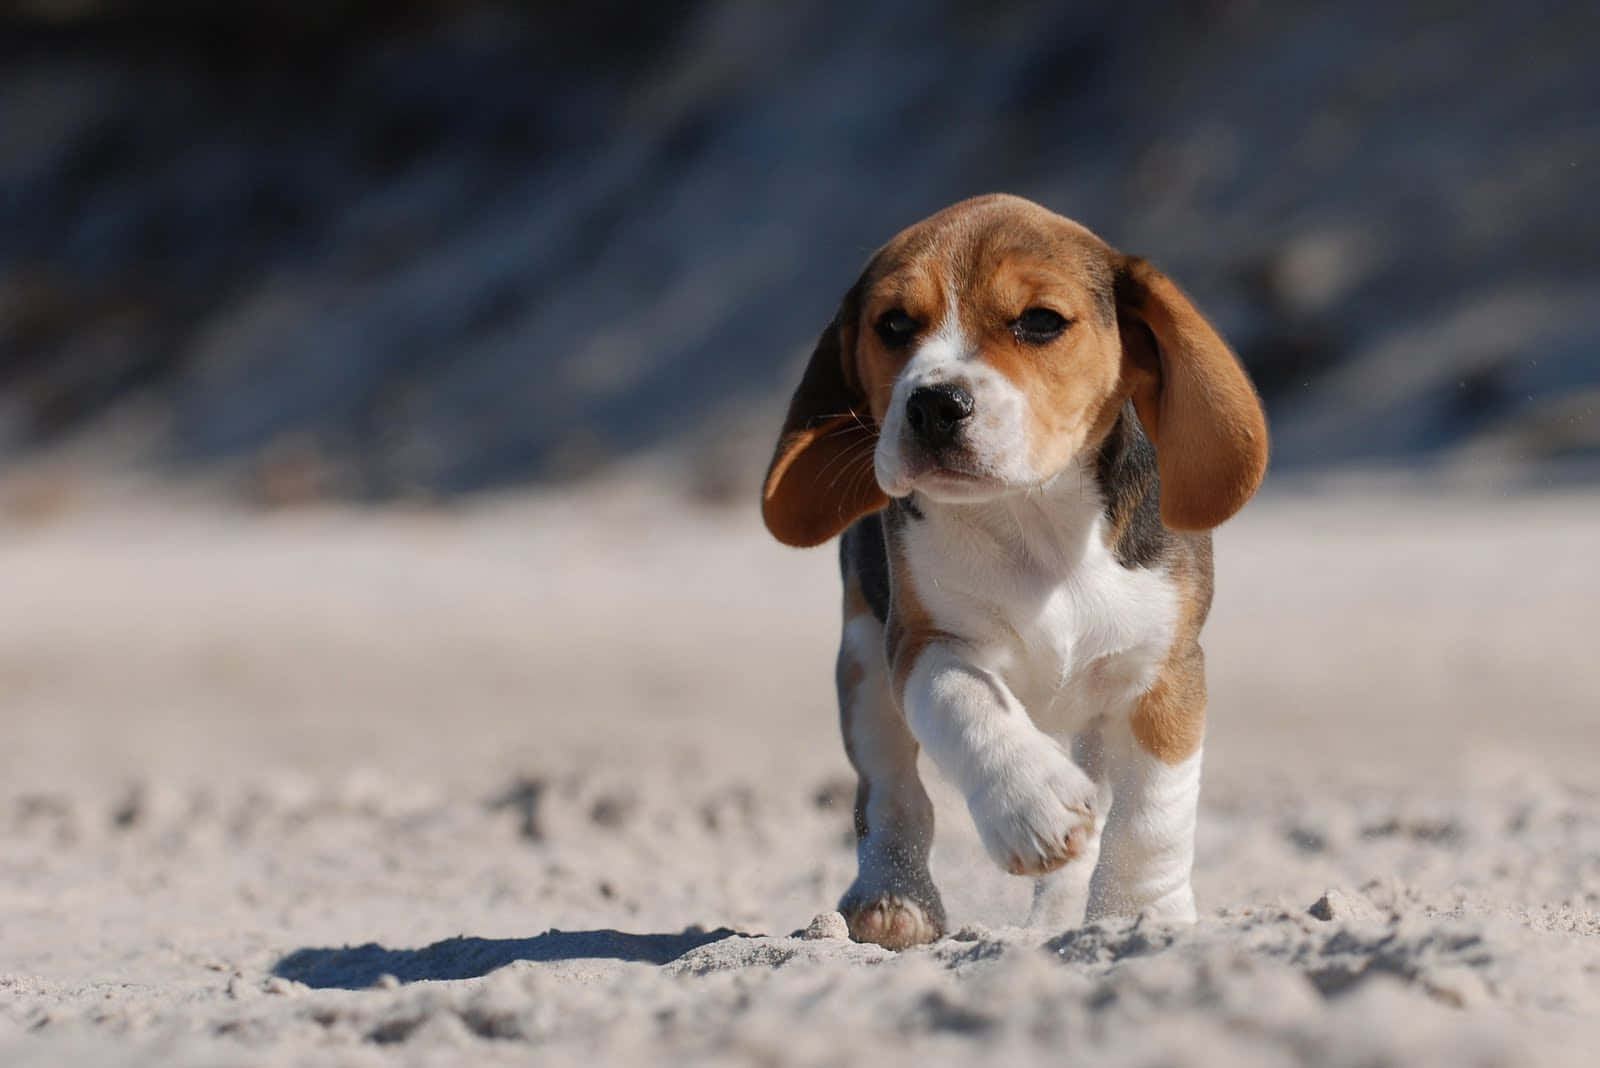 Appreciating the beauty of a friendly Beagle